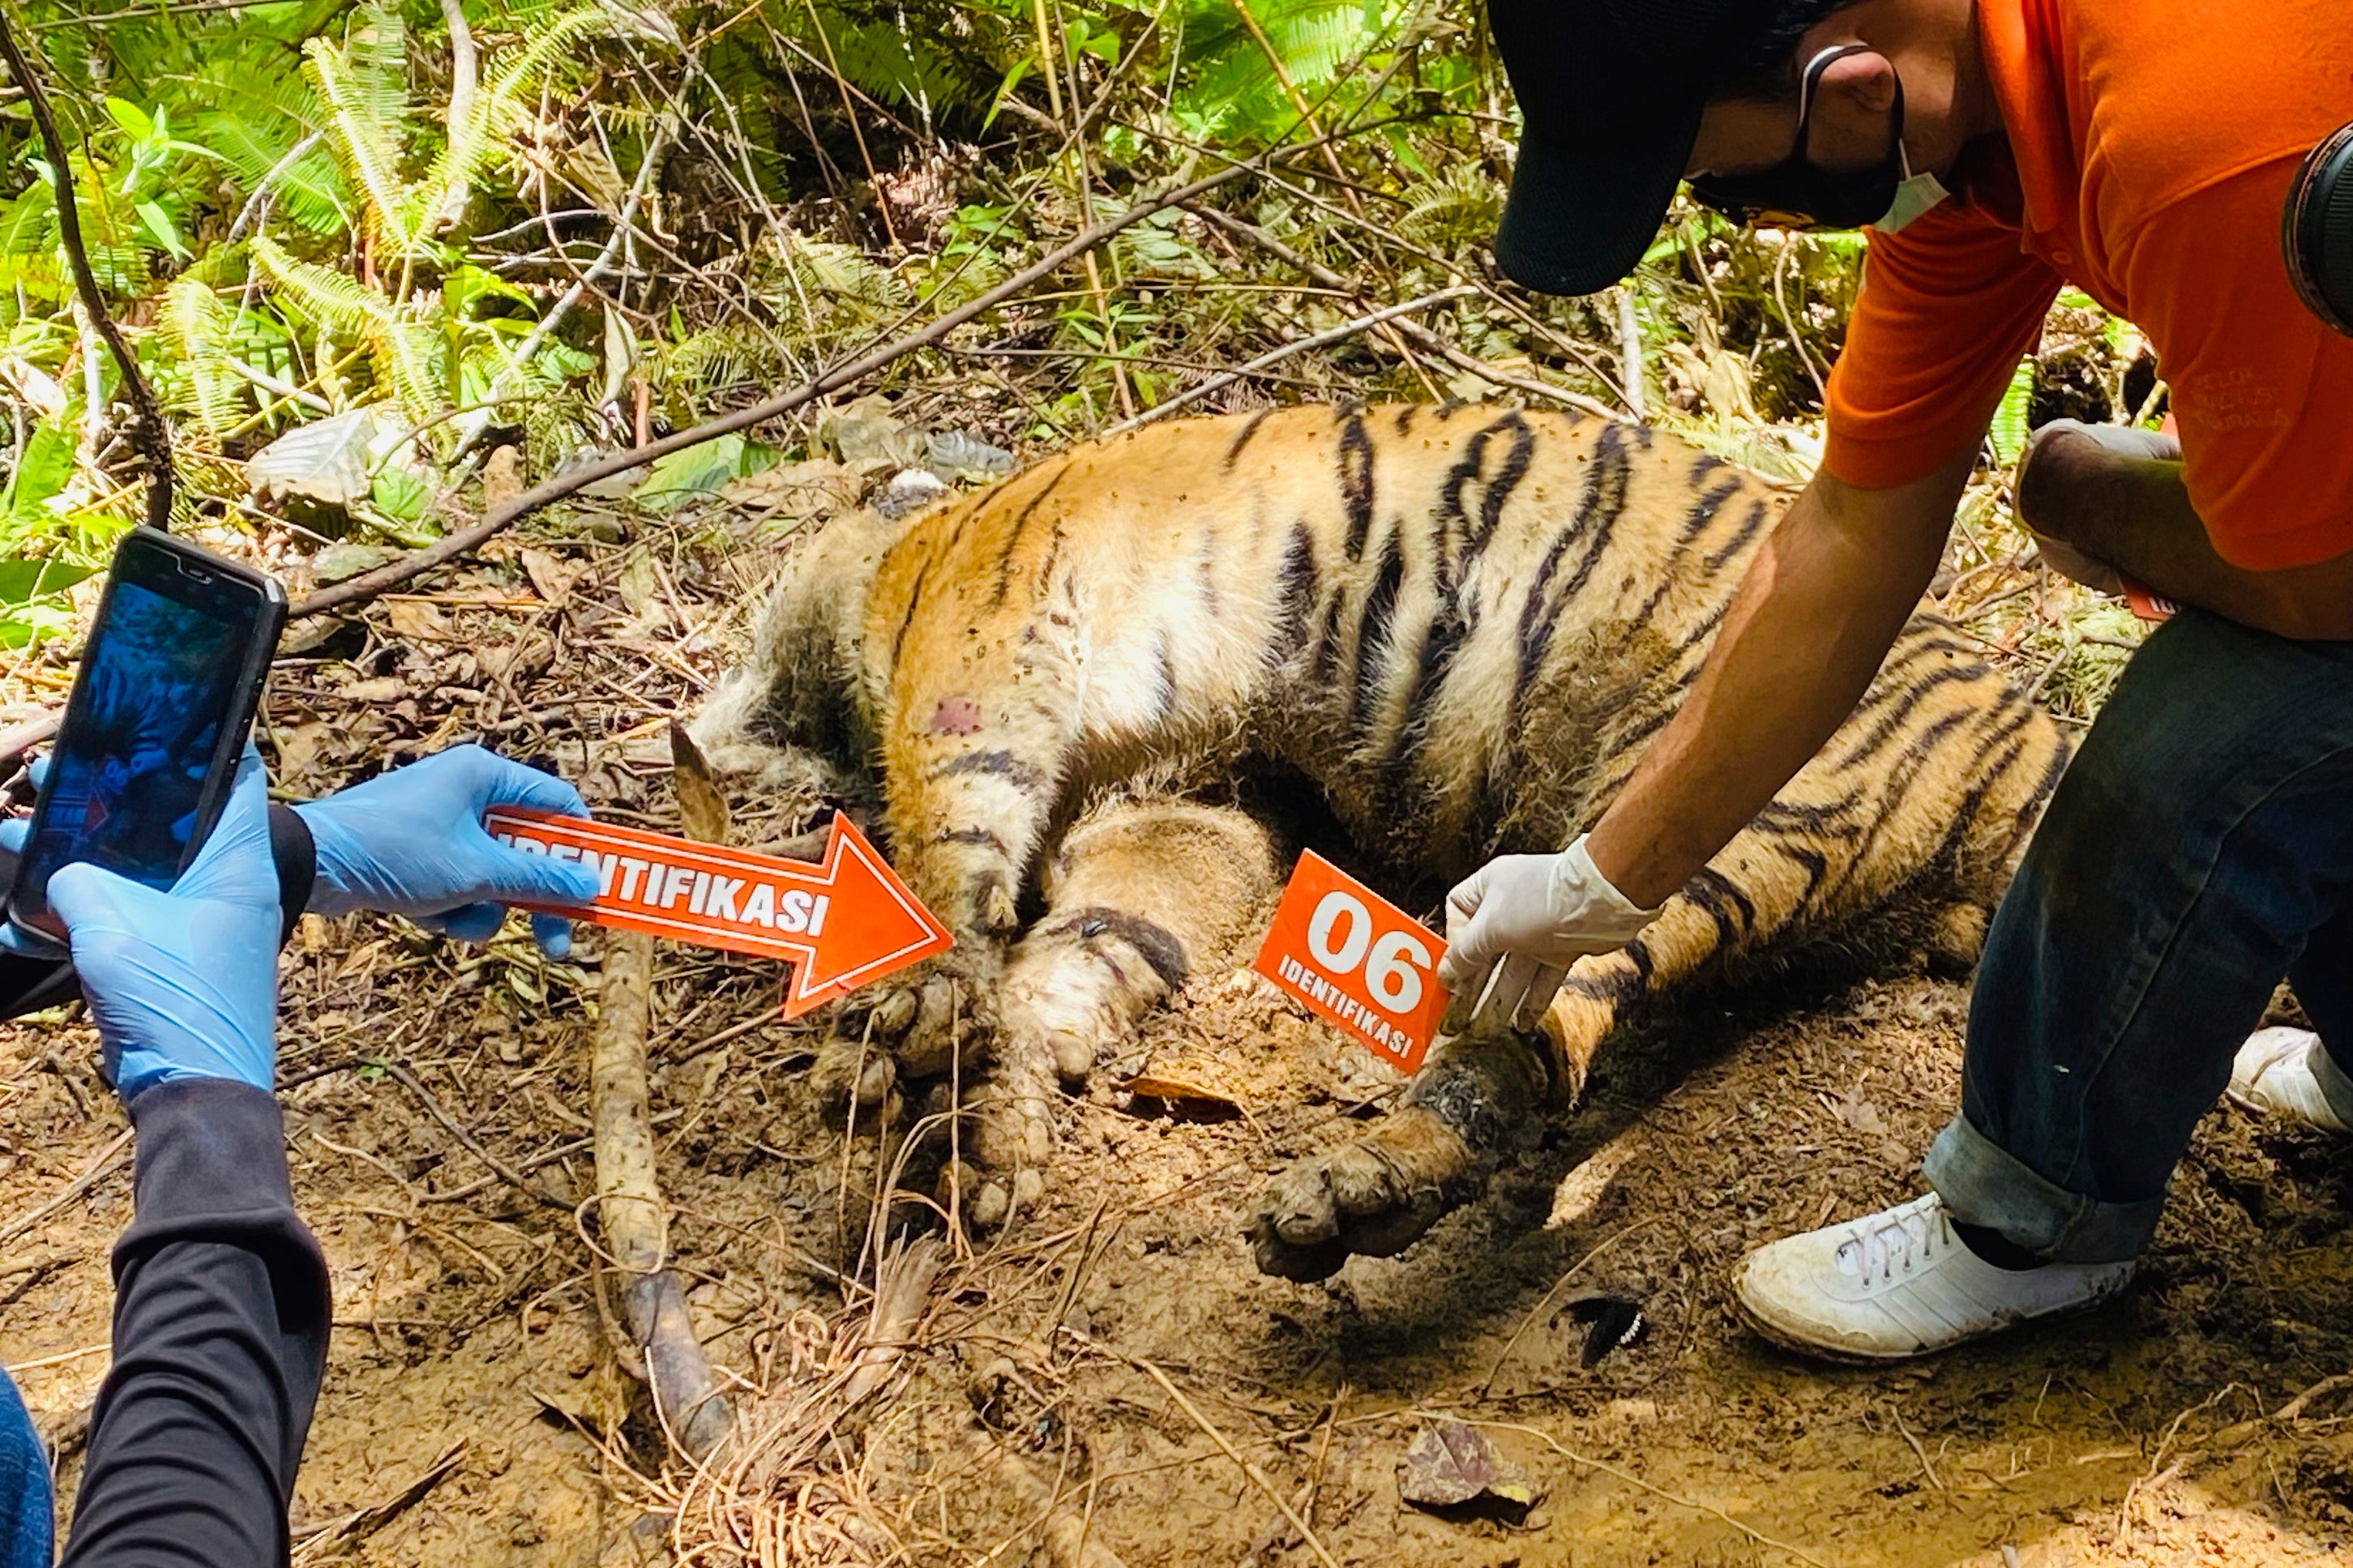 Investigators examine the body of one of the three tigers found dead in a poacher’s trap